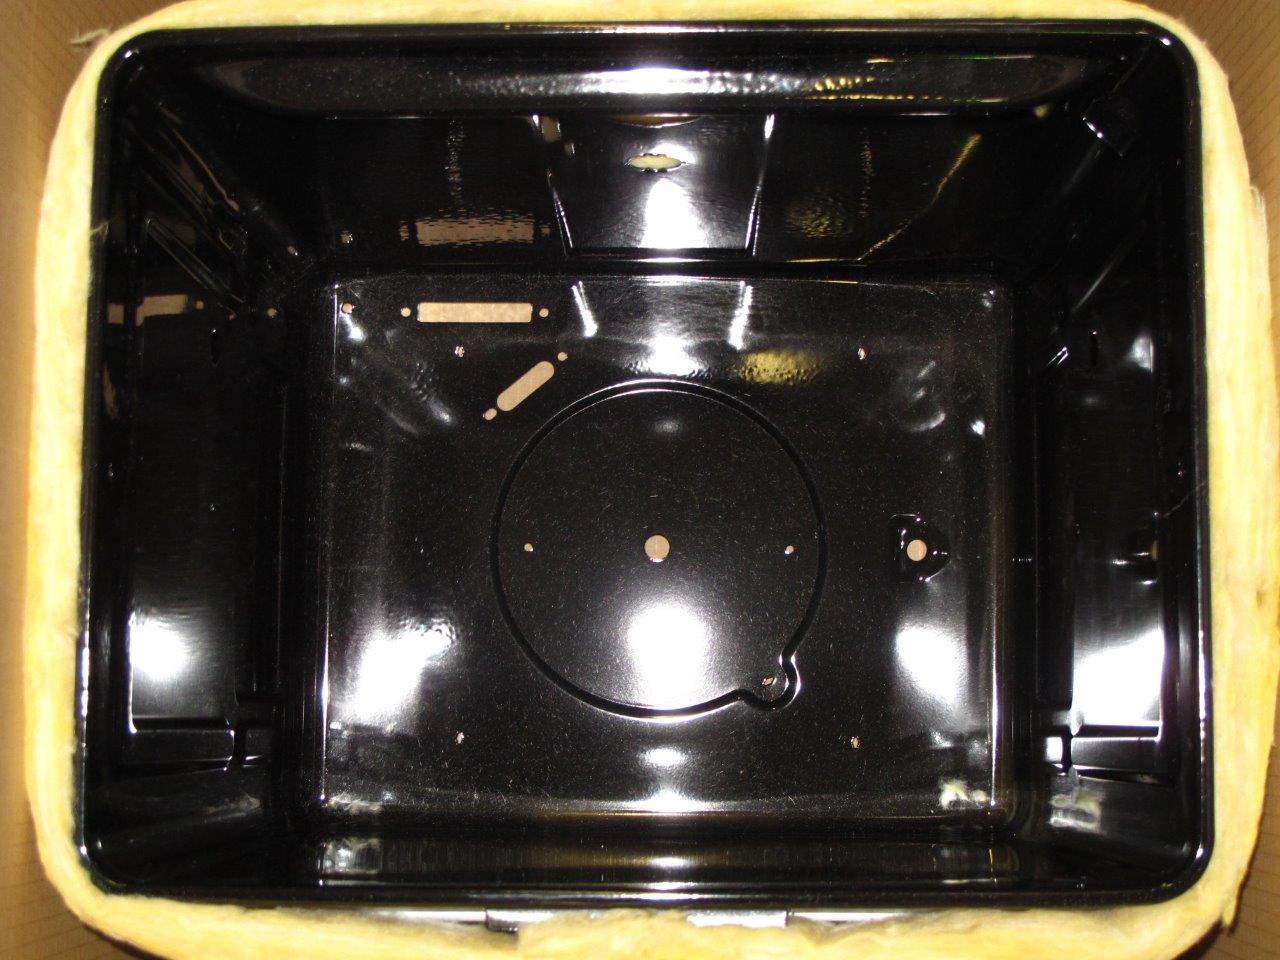 Oven chamber unit.1*3.4D Hansa 193.4TYKDS kl.A HANSA RUMLE купить с доставкой фото1